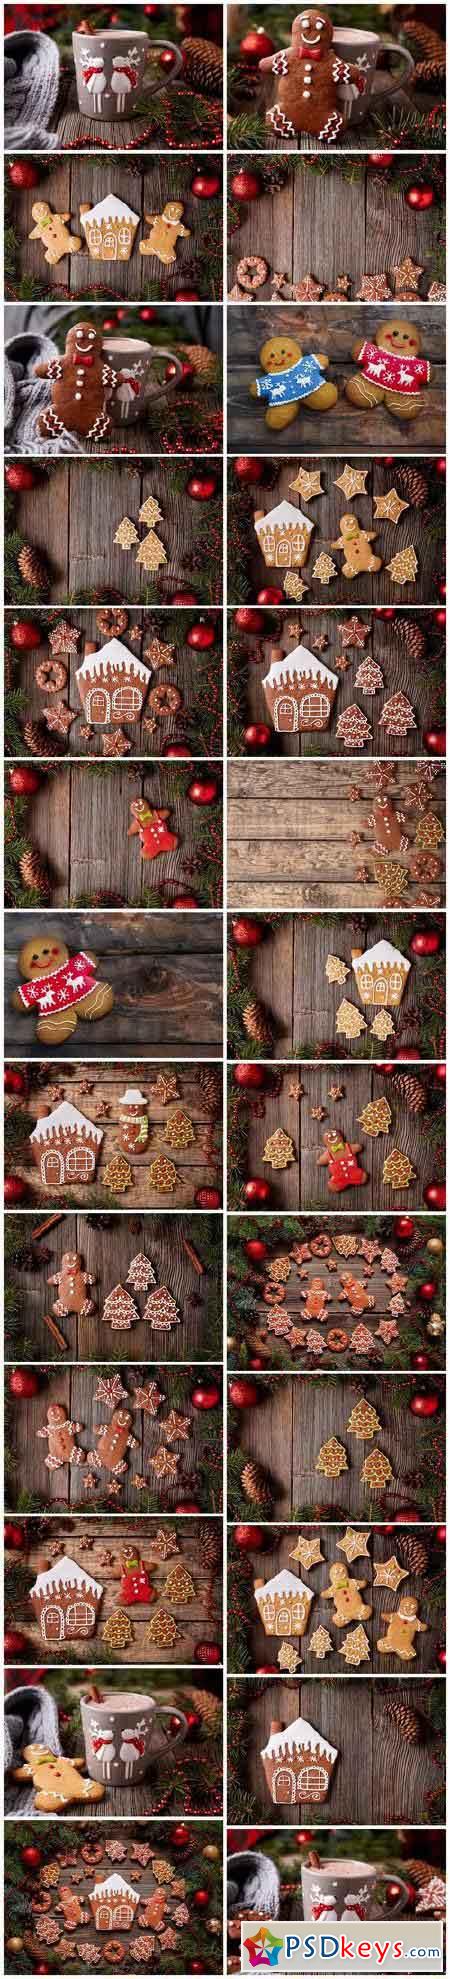 Christmas gingerbread cookies composition - 26xUHQ JPEG Photo Stock